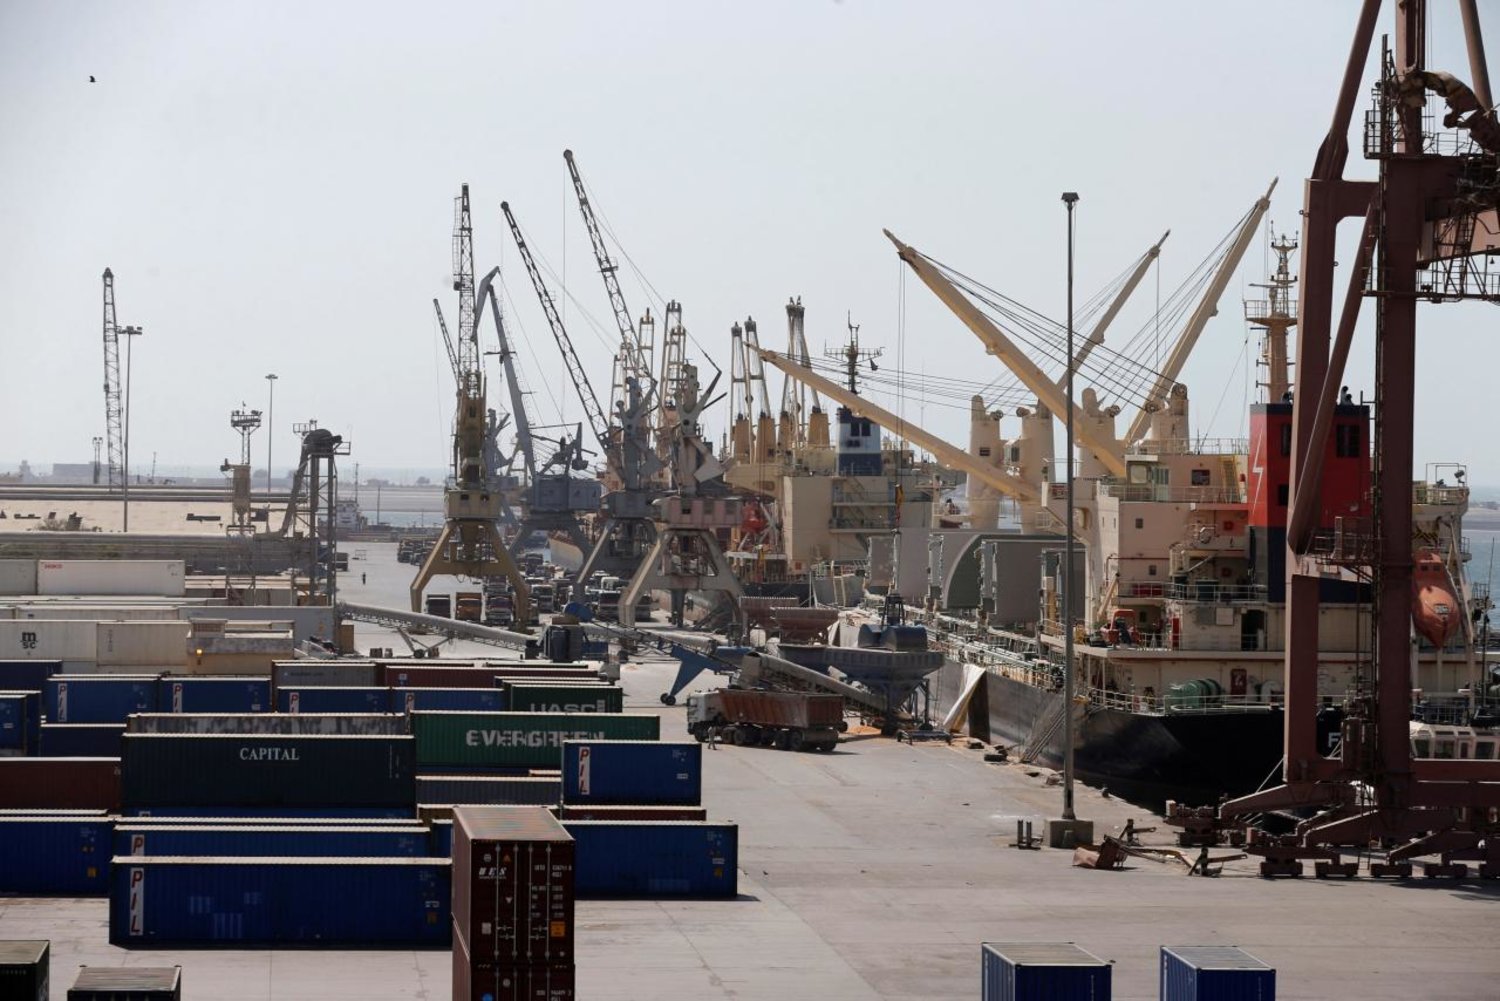 Ships are unloaded at the Red Sea port of Hodeidah, Yemen November 16, 2016. REUTERS/Khaled Abdullah/File Photo